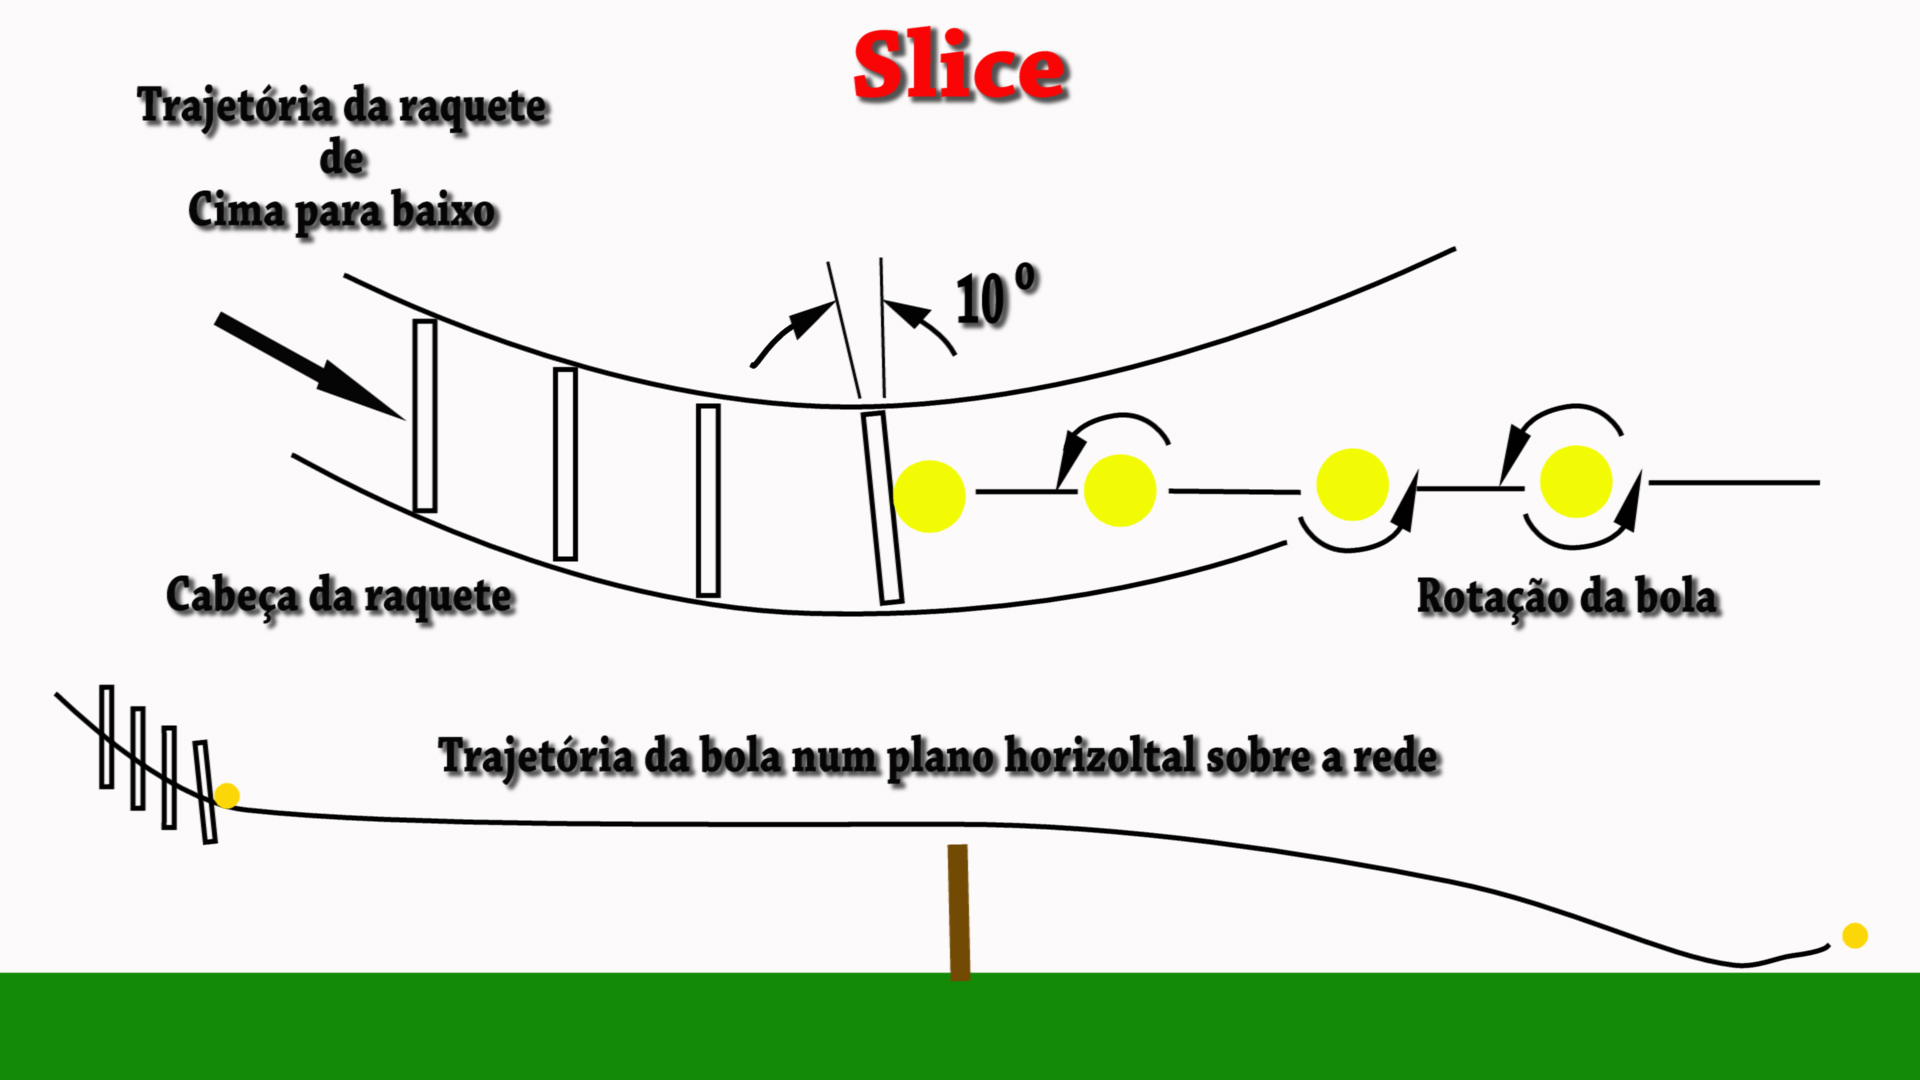  Slice foto diagrama